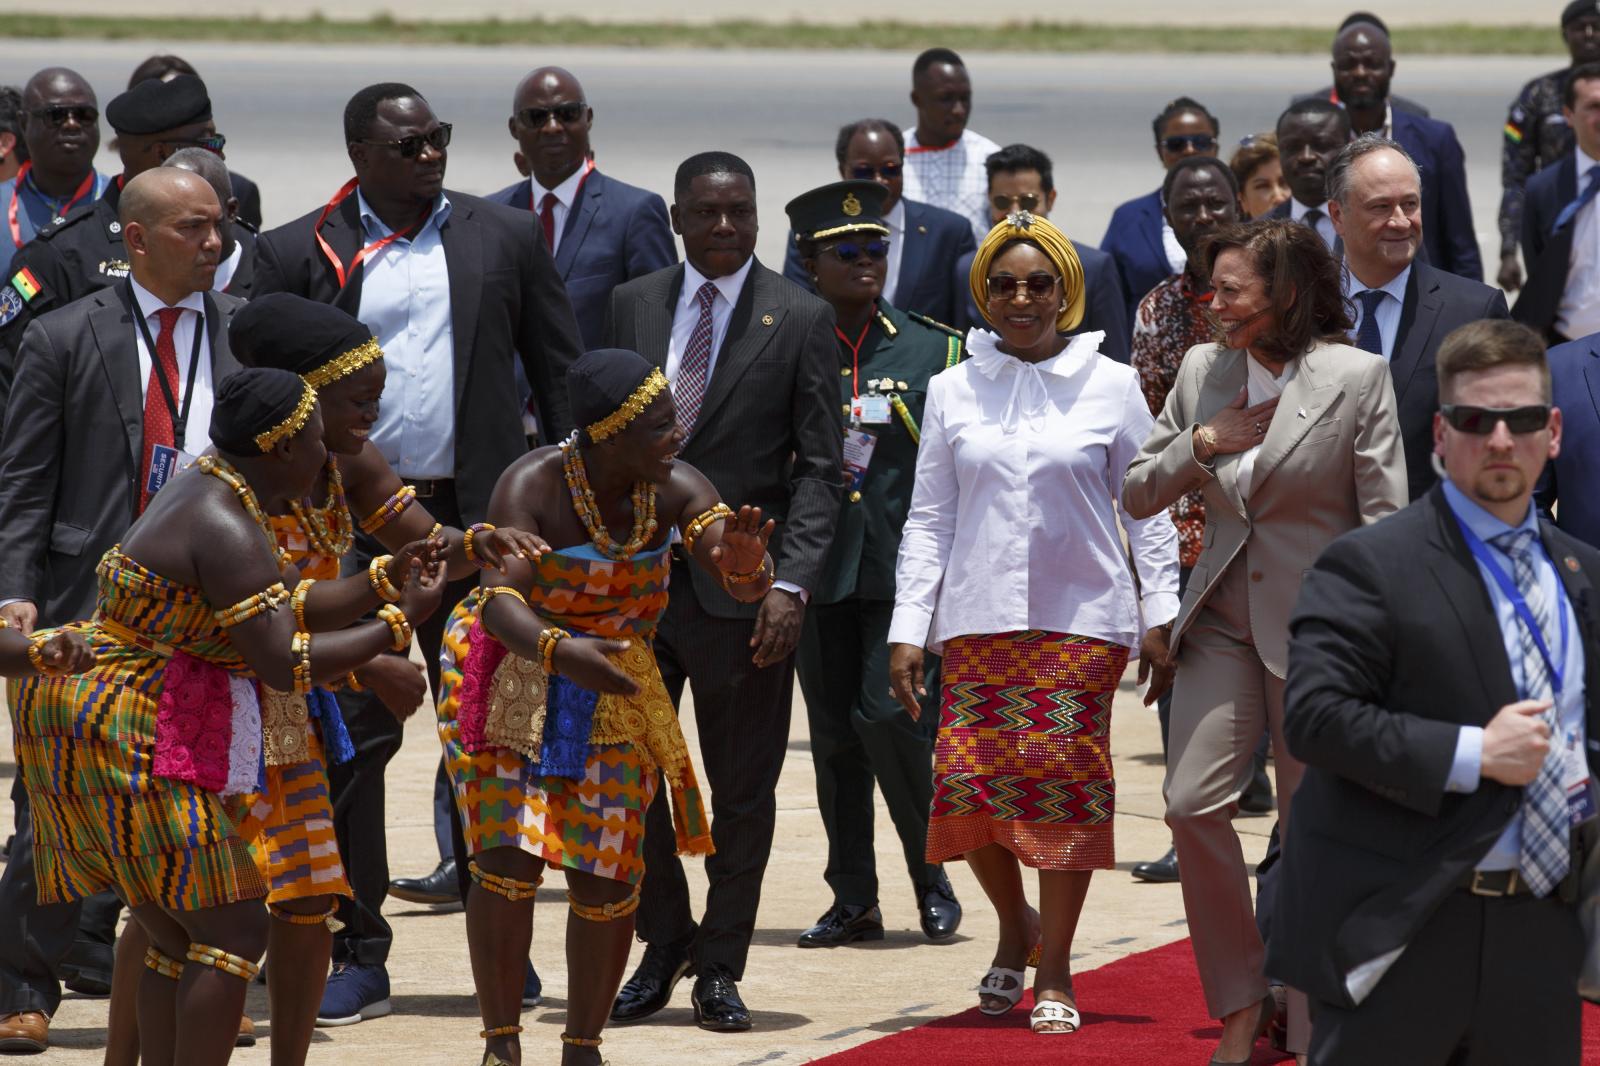 Image from U.S. Vice President Kamala Harris Visit To Ghana - U.S. Vice President Kamala Harris is greeted by...